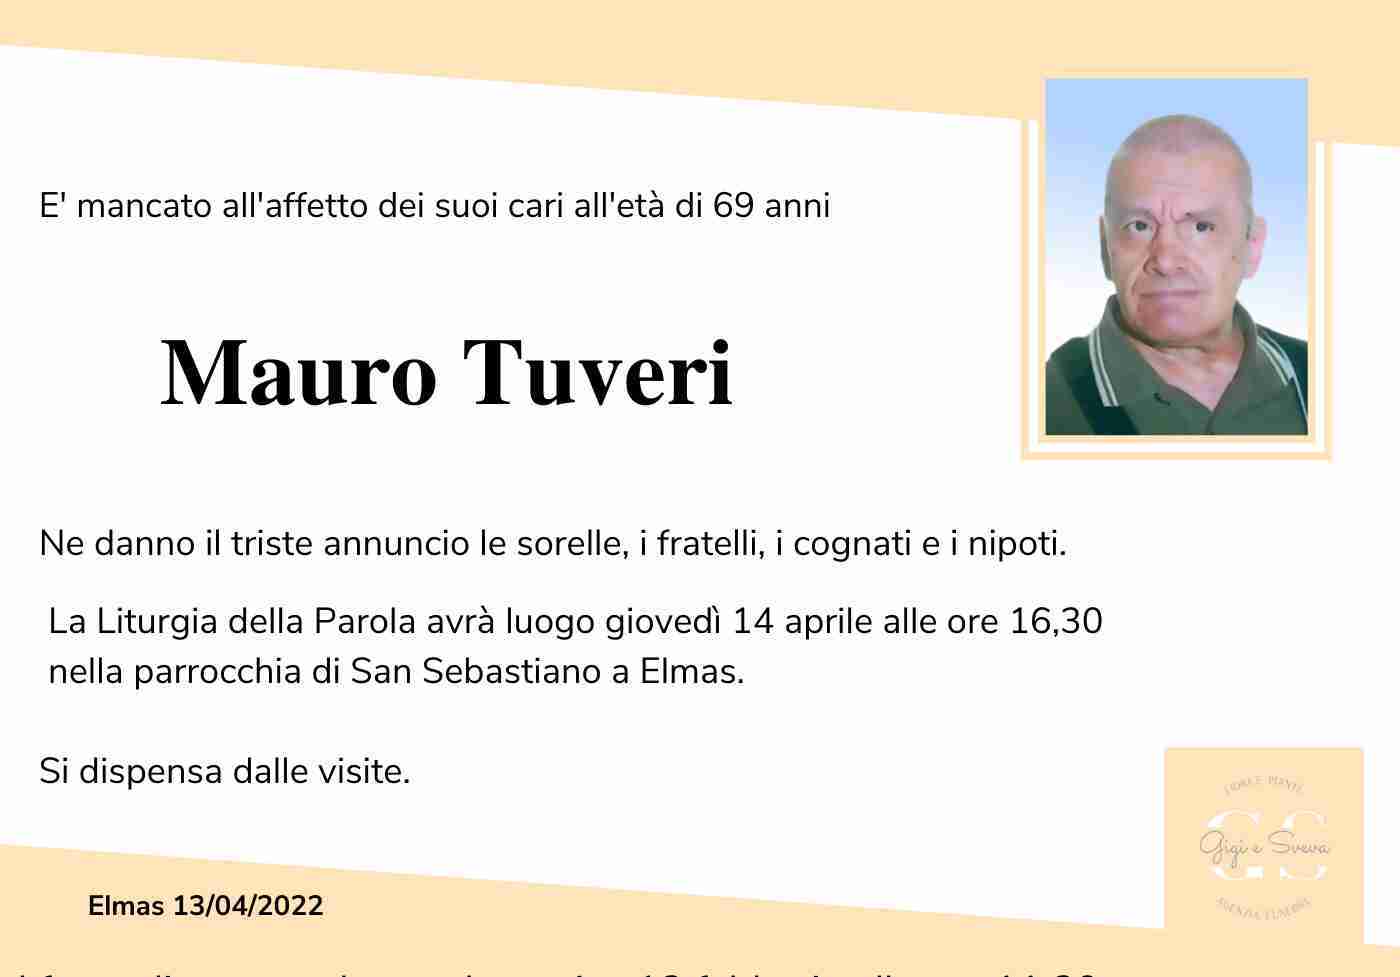 Mauro Tuveri